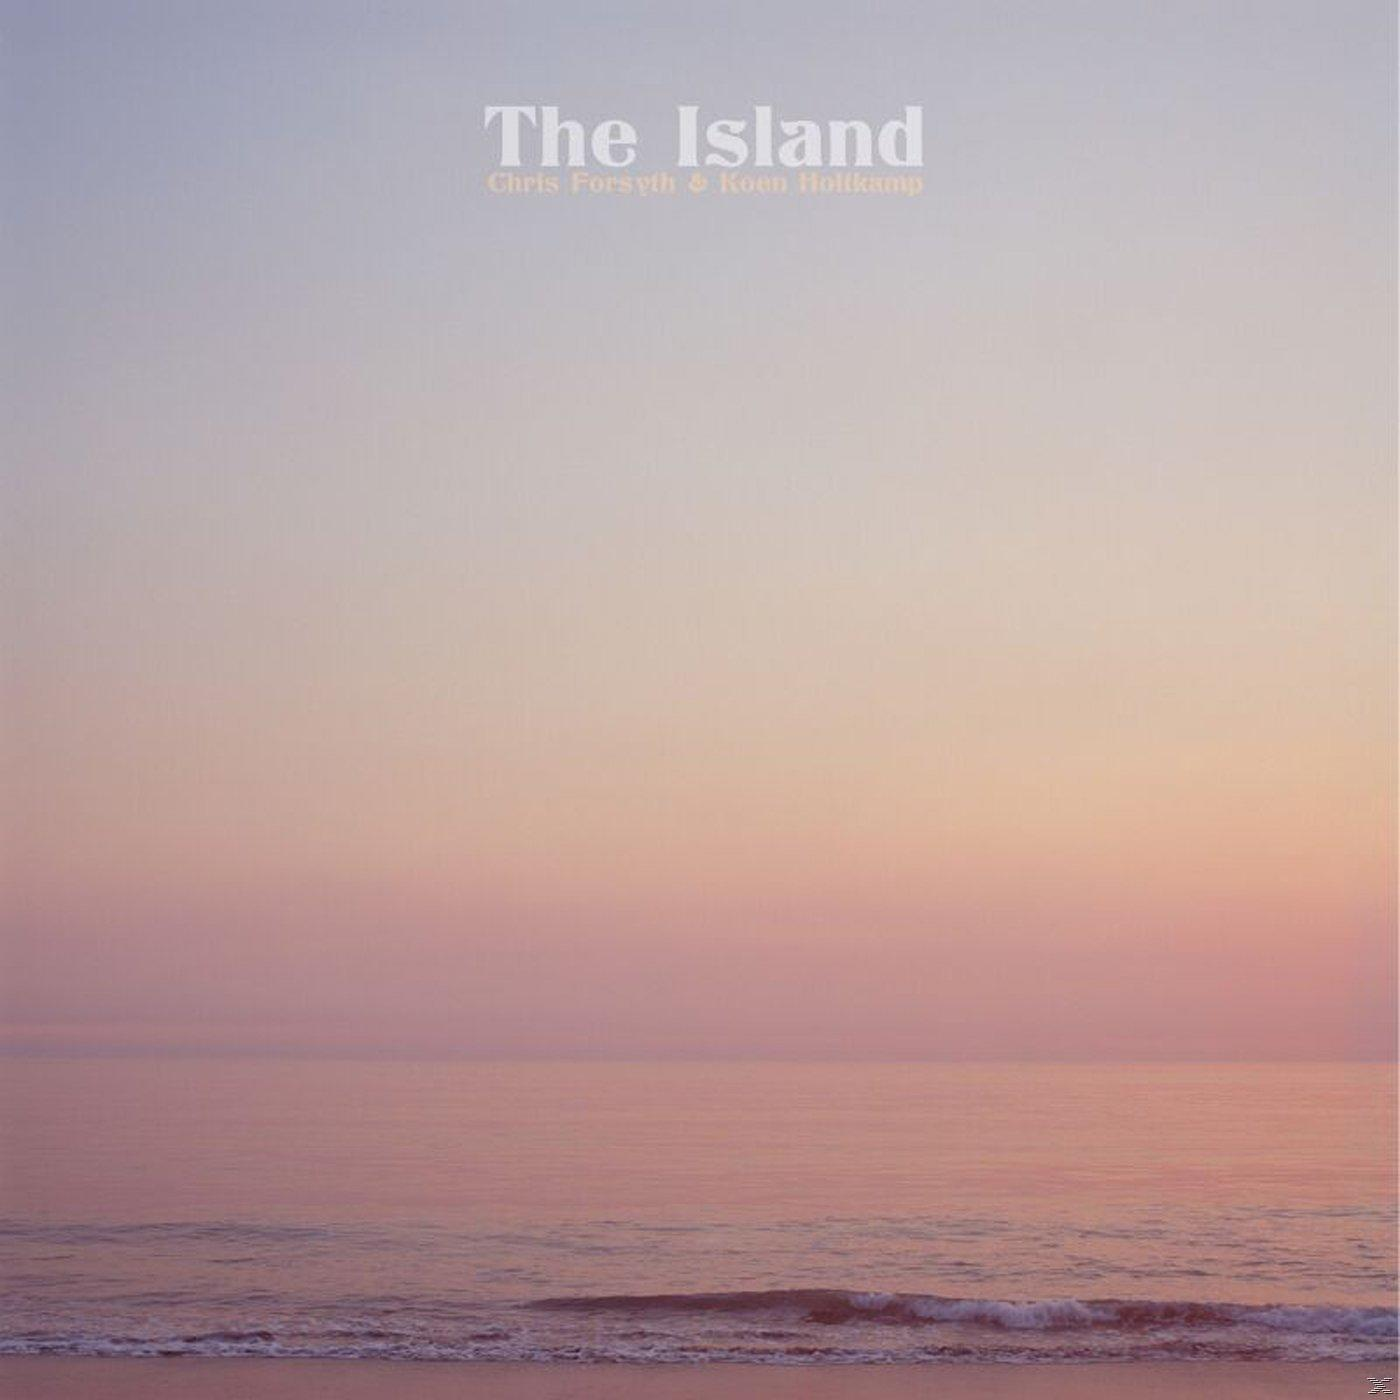 Chris -& Koen Holtkamp- Forsyth - - Island The (CD)